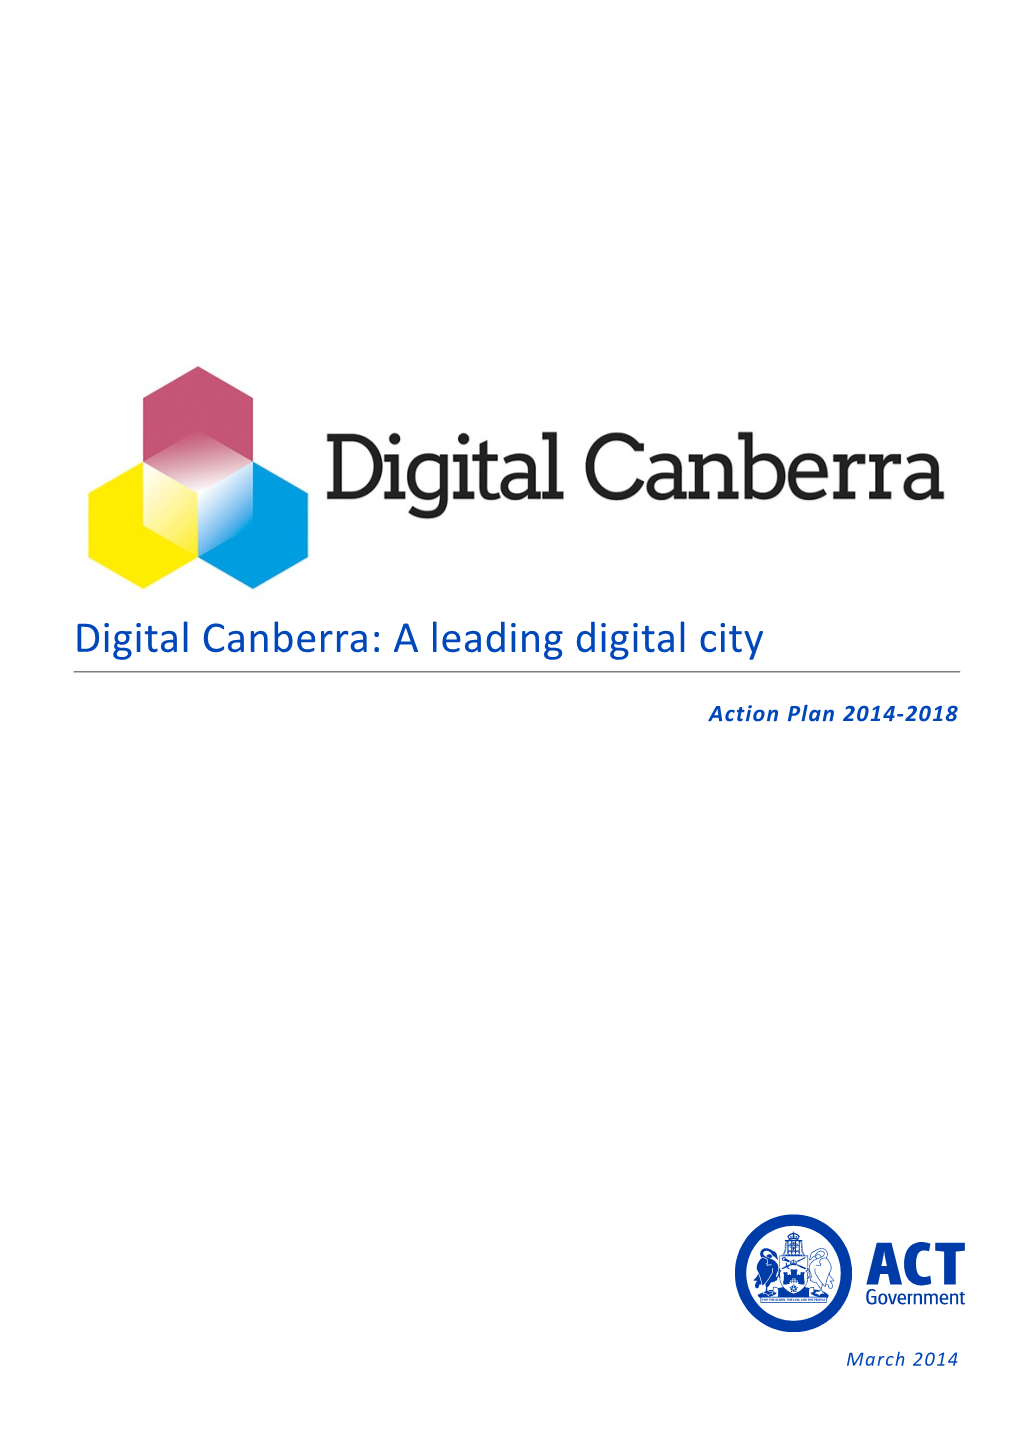 Digital Canberra: a Leading Digital City - Action Plan 2014-2018